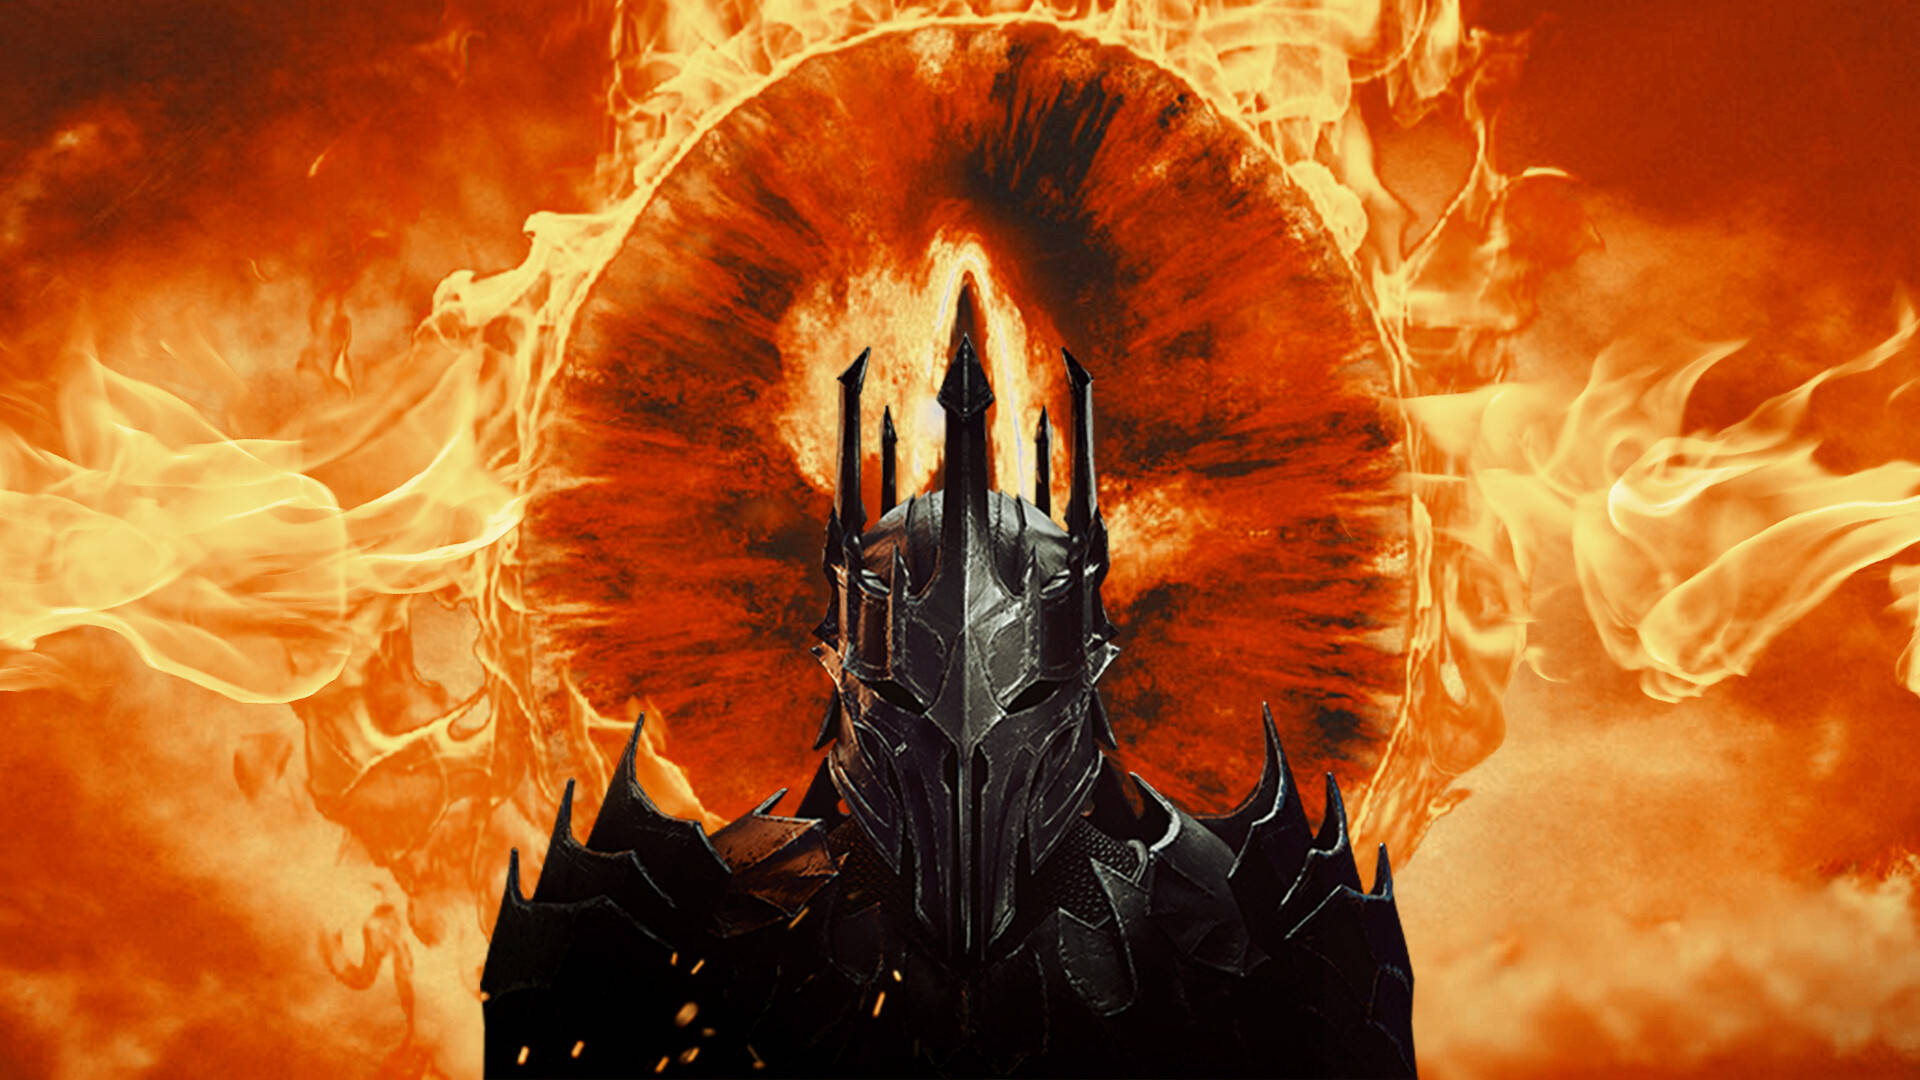 Free Eye Of Sauron Wallpaper Downloads, [100+] Eye Of Sauron Wallpapers for  FREE 